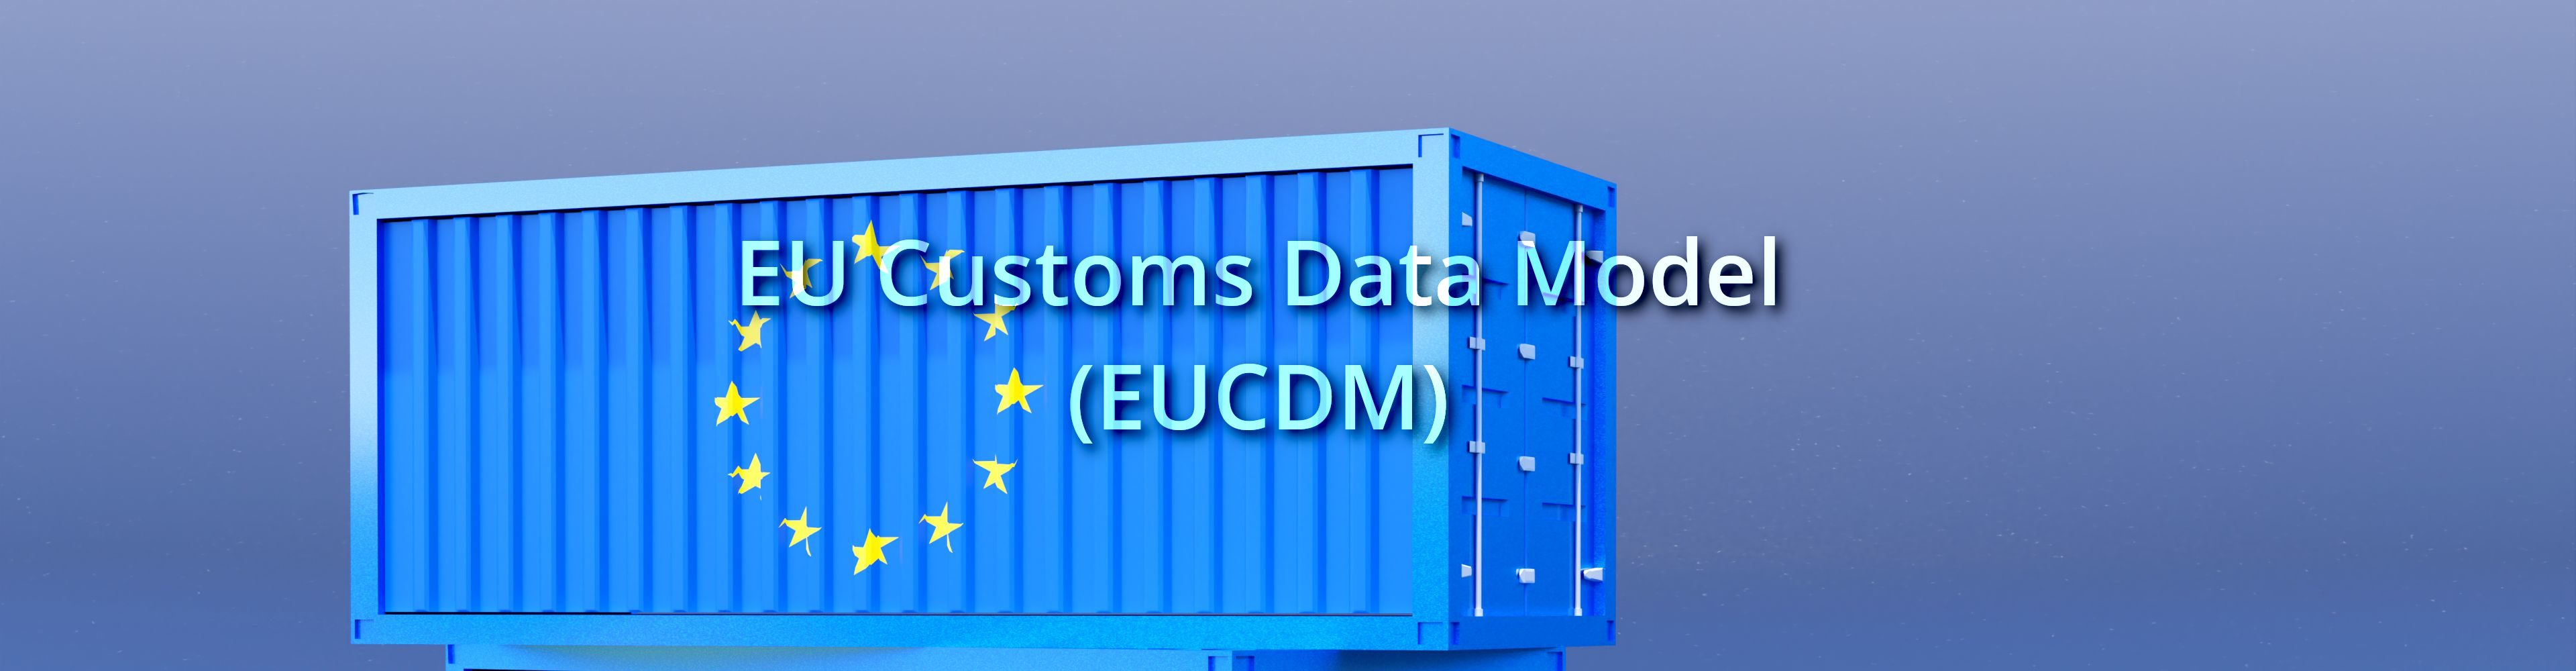 EU Customs Data Model